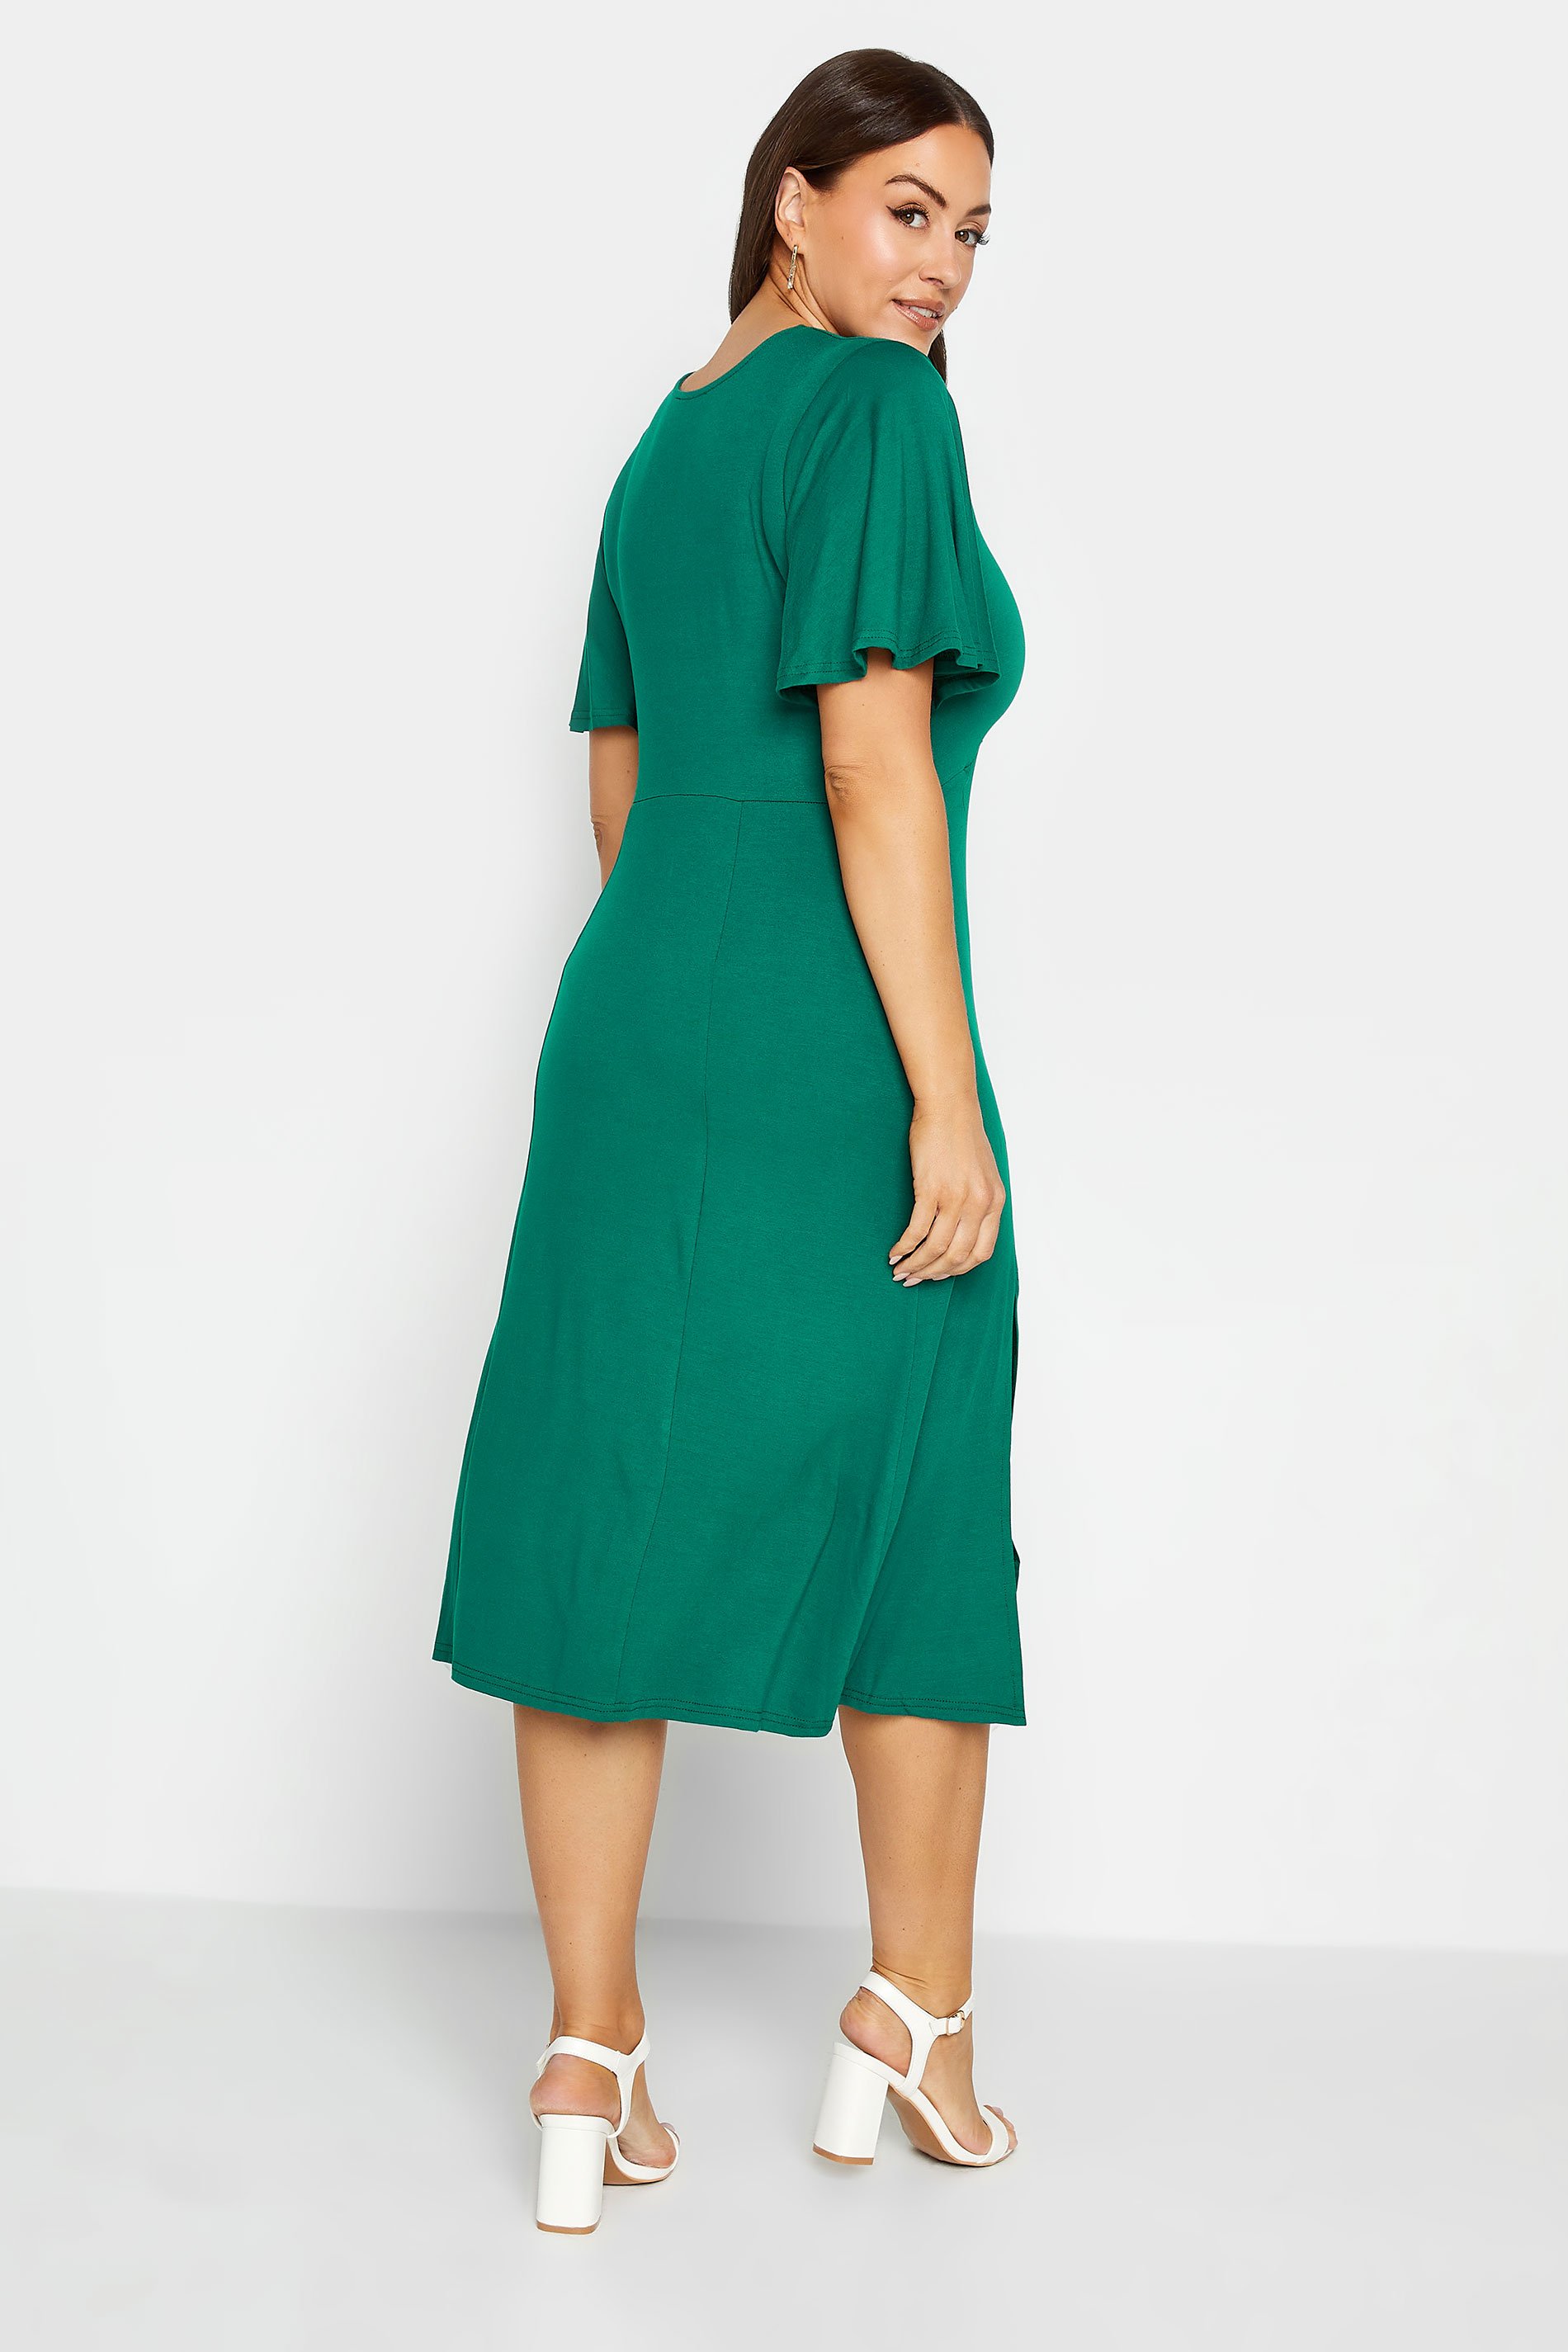 M&Co Forest Green Angel Sleeve Split Hem Midi Dress | M&Co 3